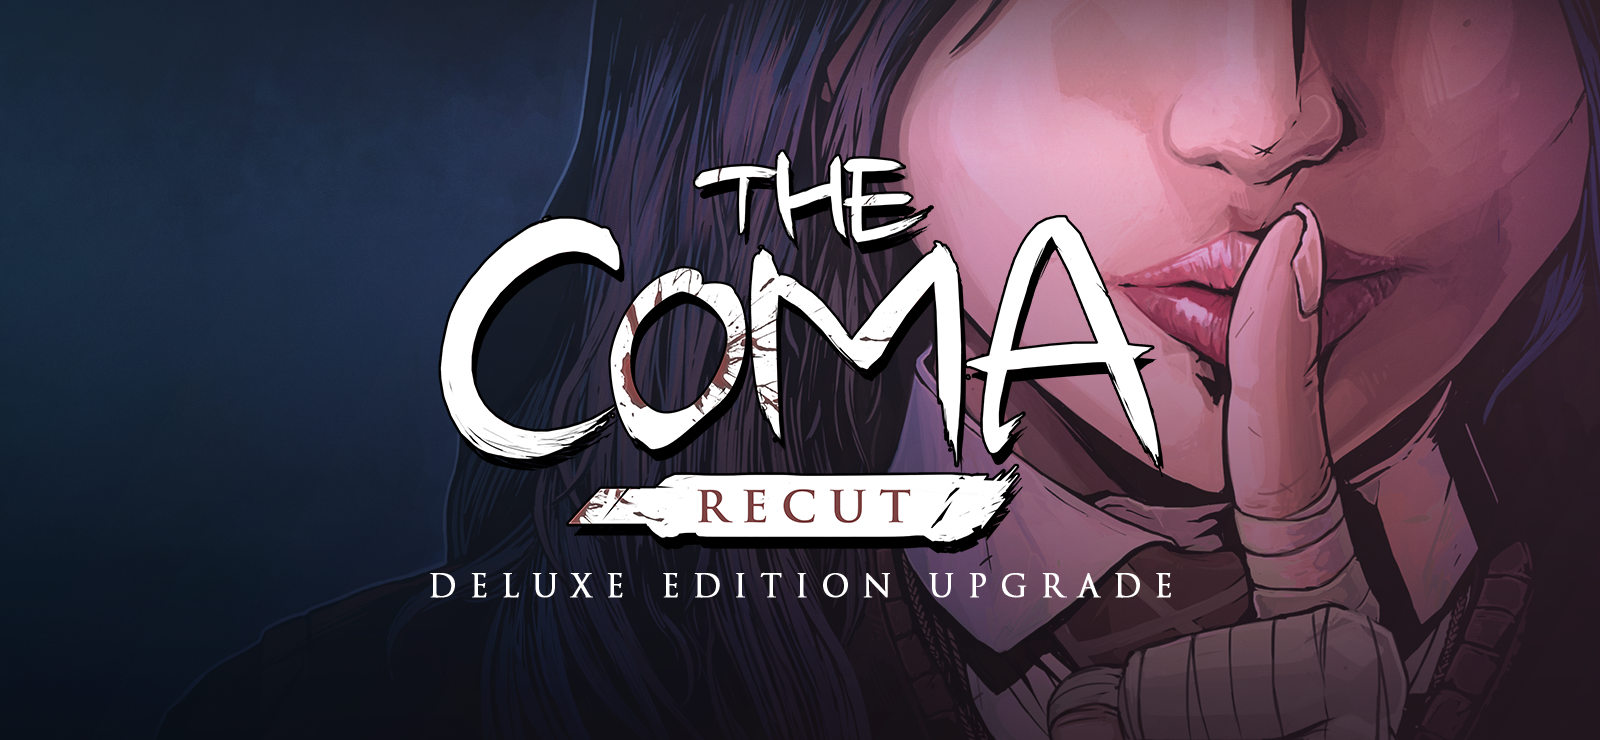 The Coma: Recut Deluxe Edition Upgrade